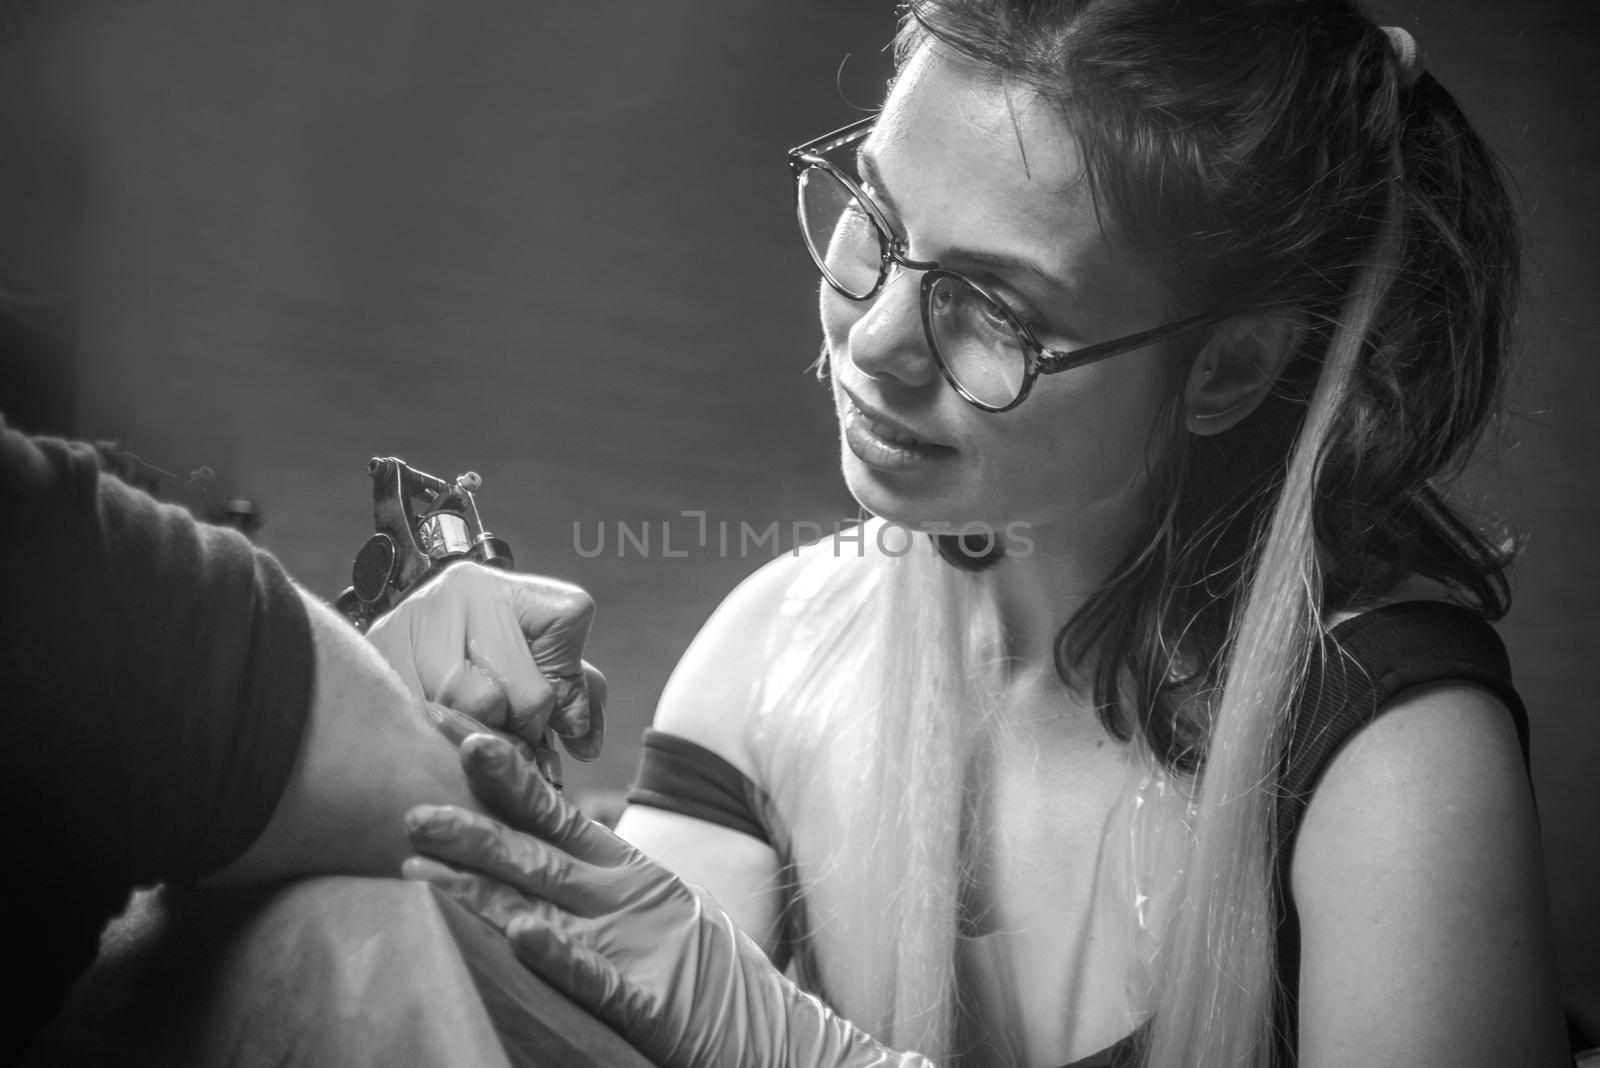 Tattoo artist demonstrates the process of getting tattoo in salon.